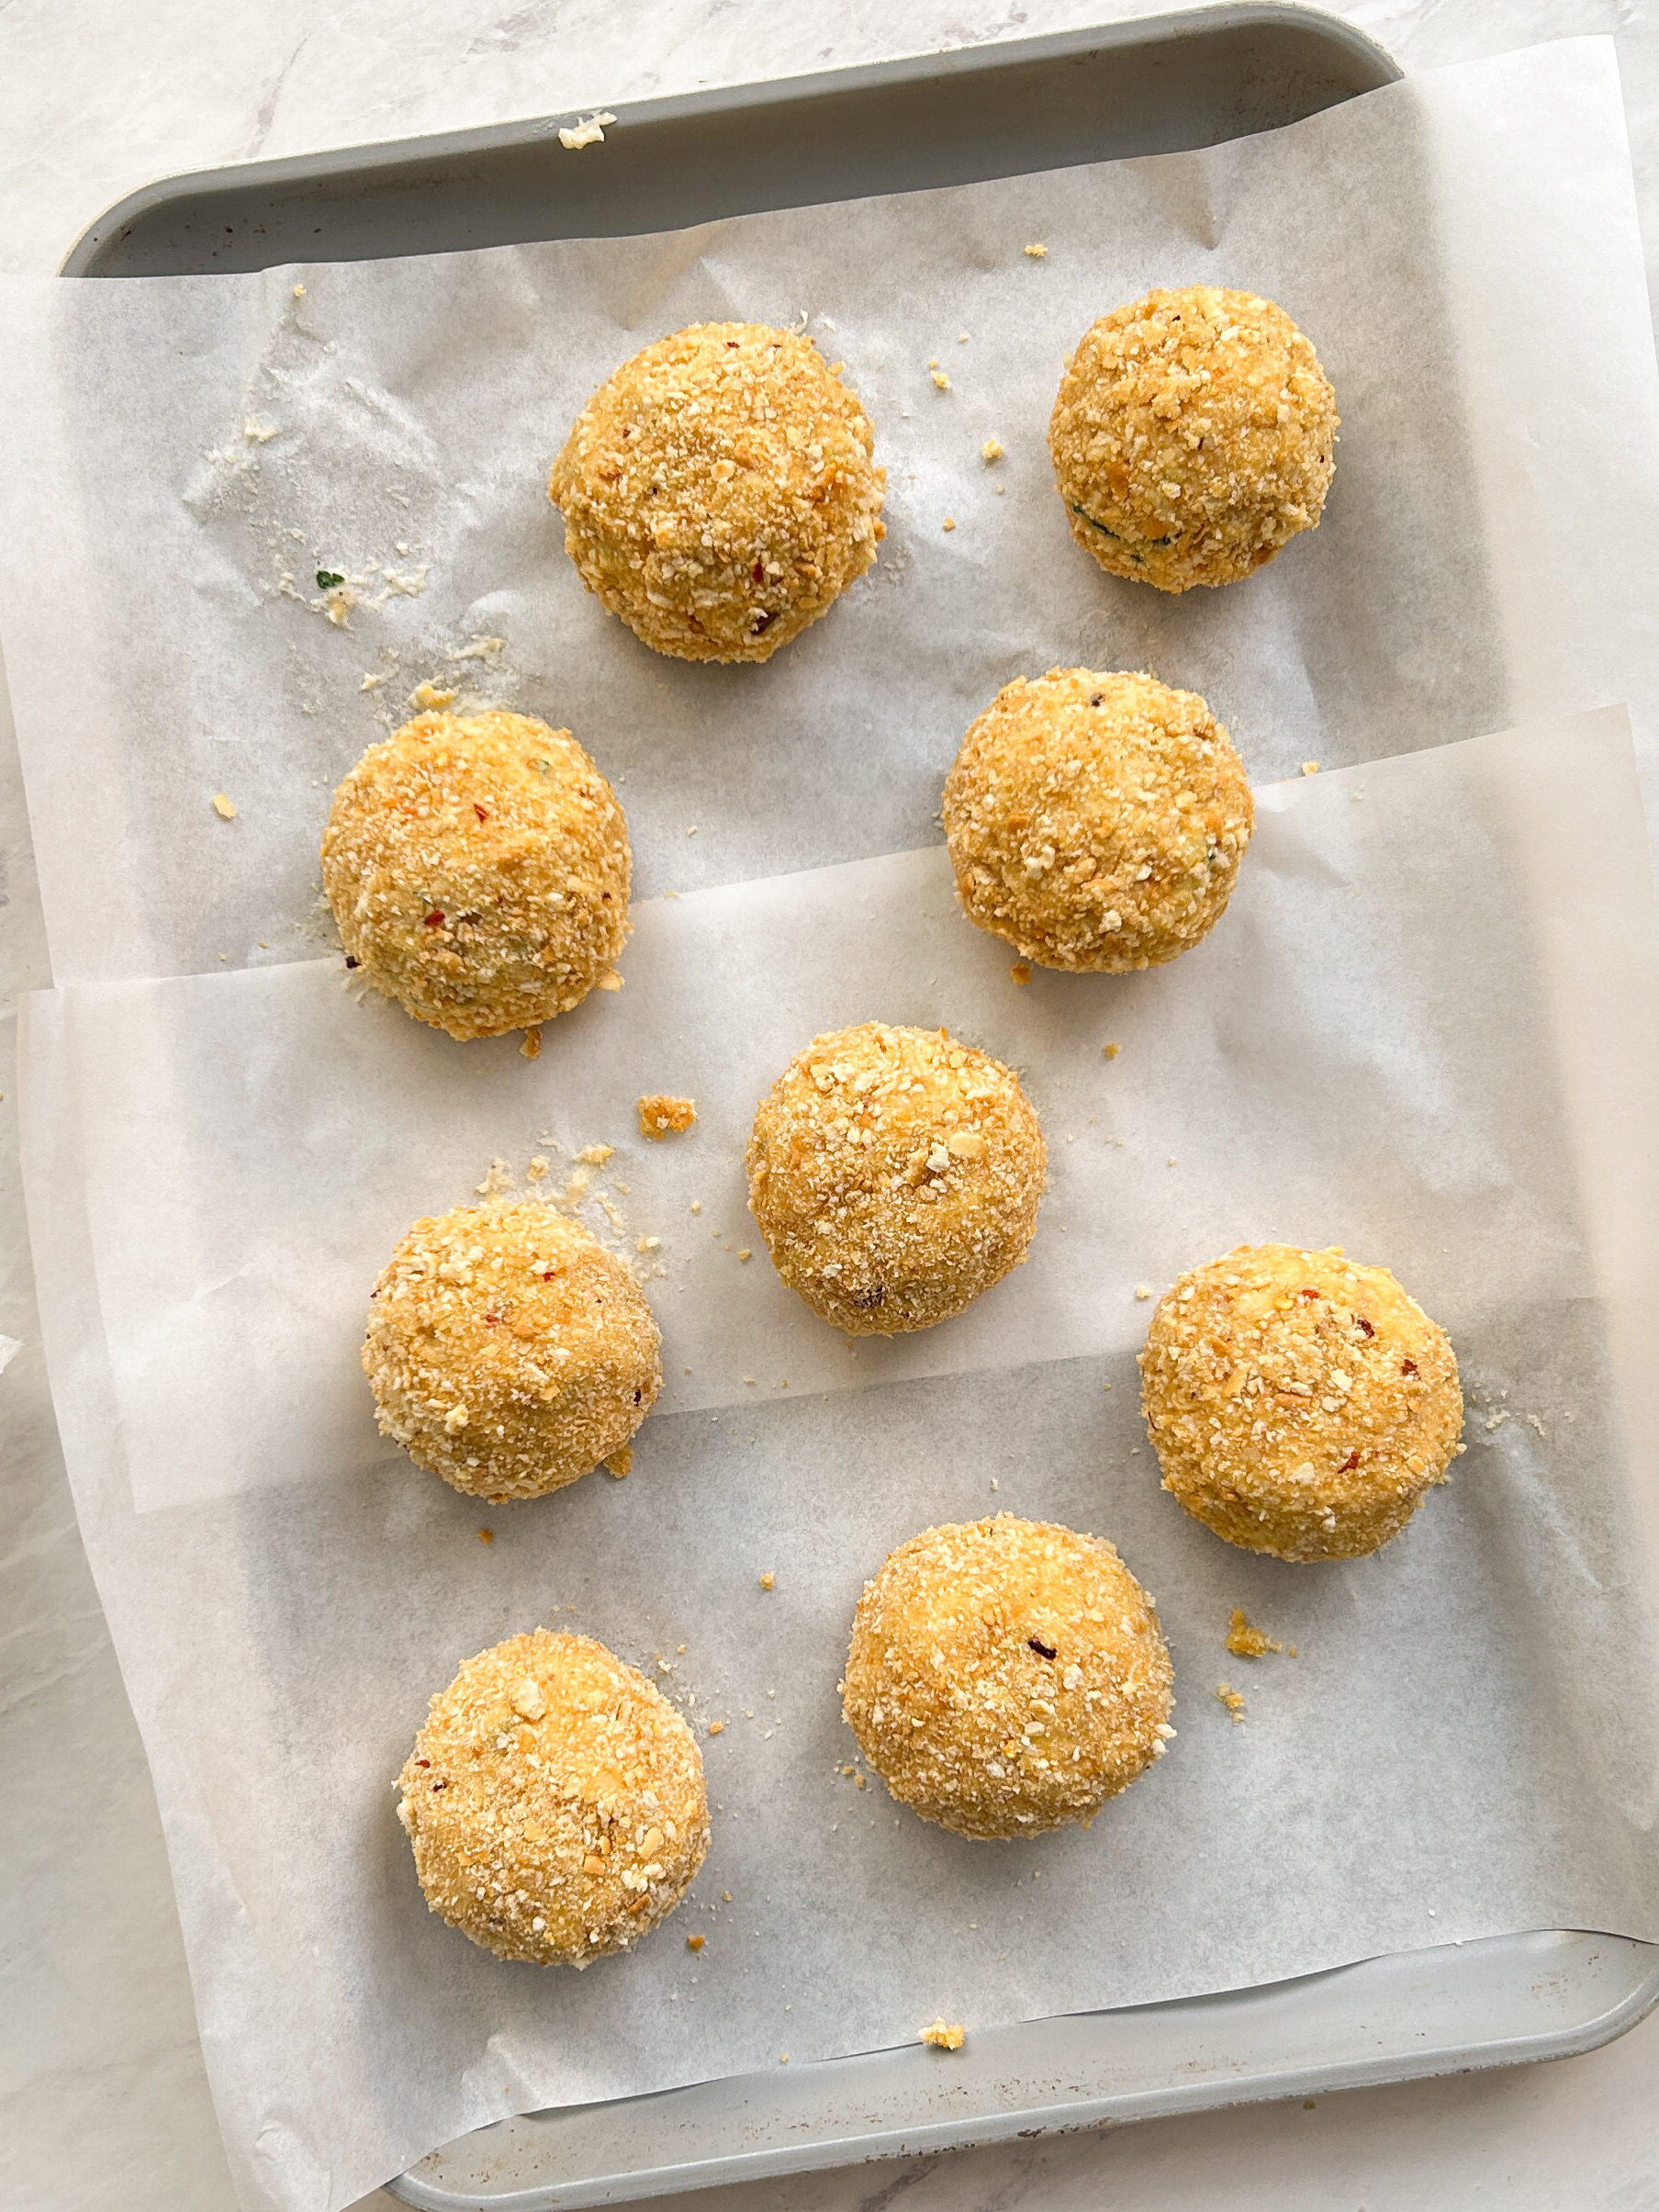 9 mashed potato balls coated with crushed crackers on a baking sheet